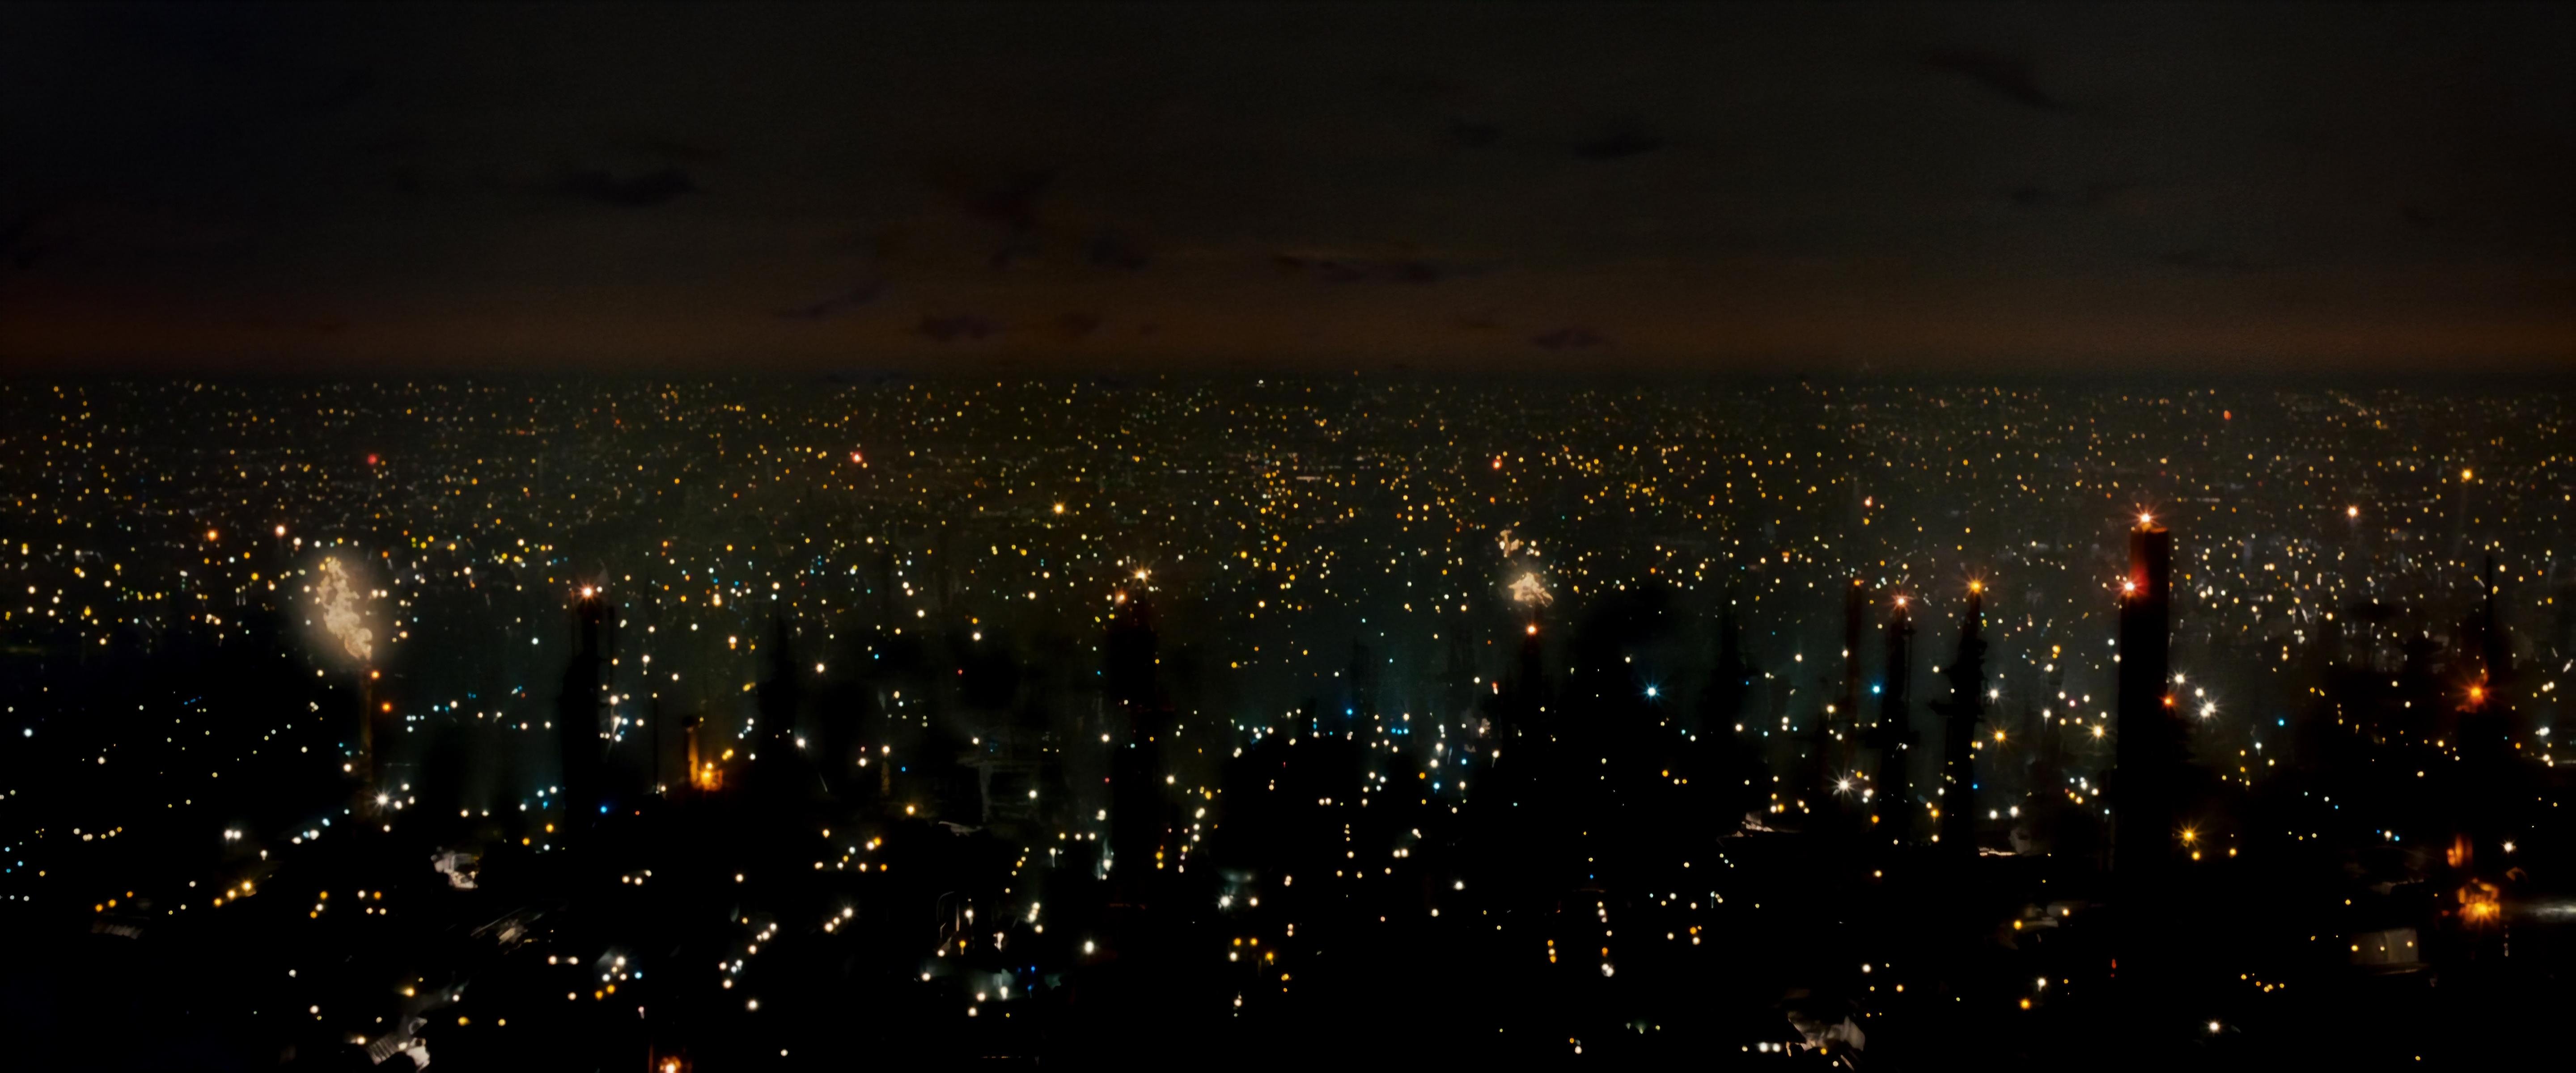 349698 Blade Runner 2049 Building City Futuristic Skyscraper 4k  Rare  Gallery HD Wallpapers